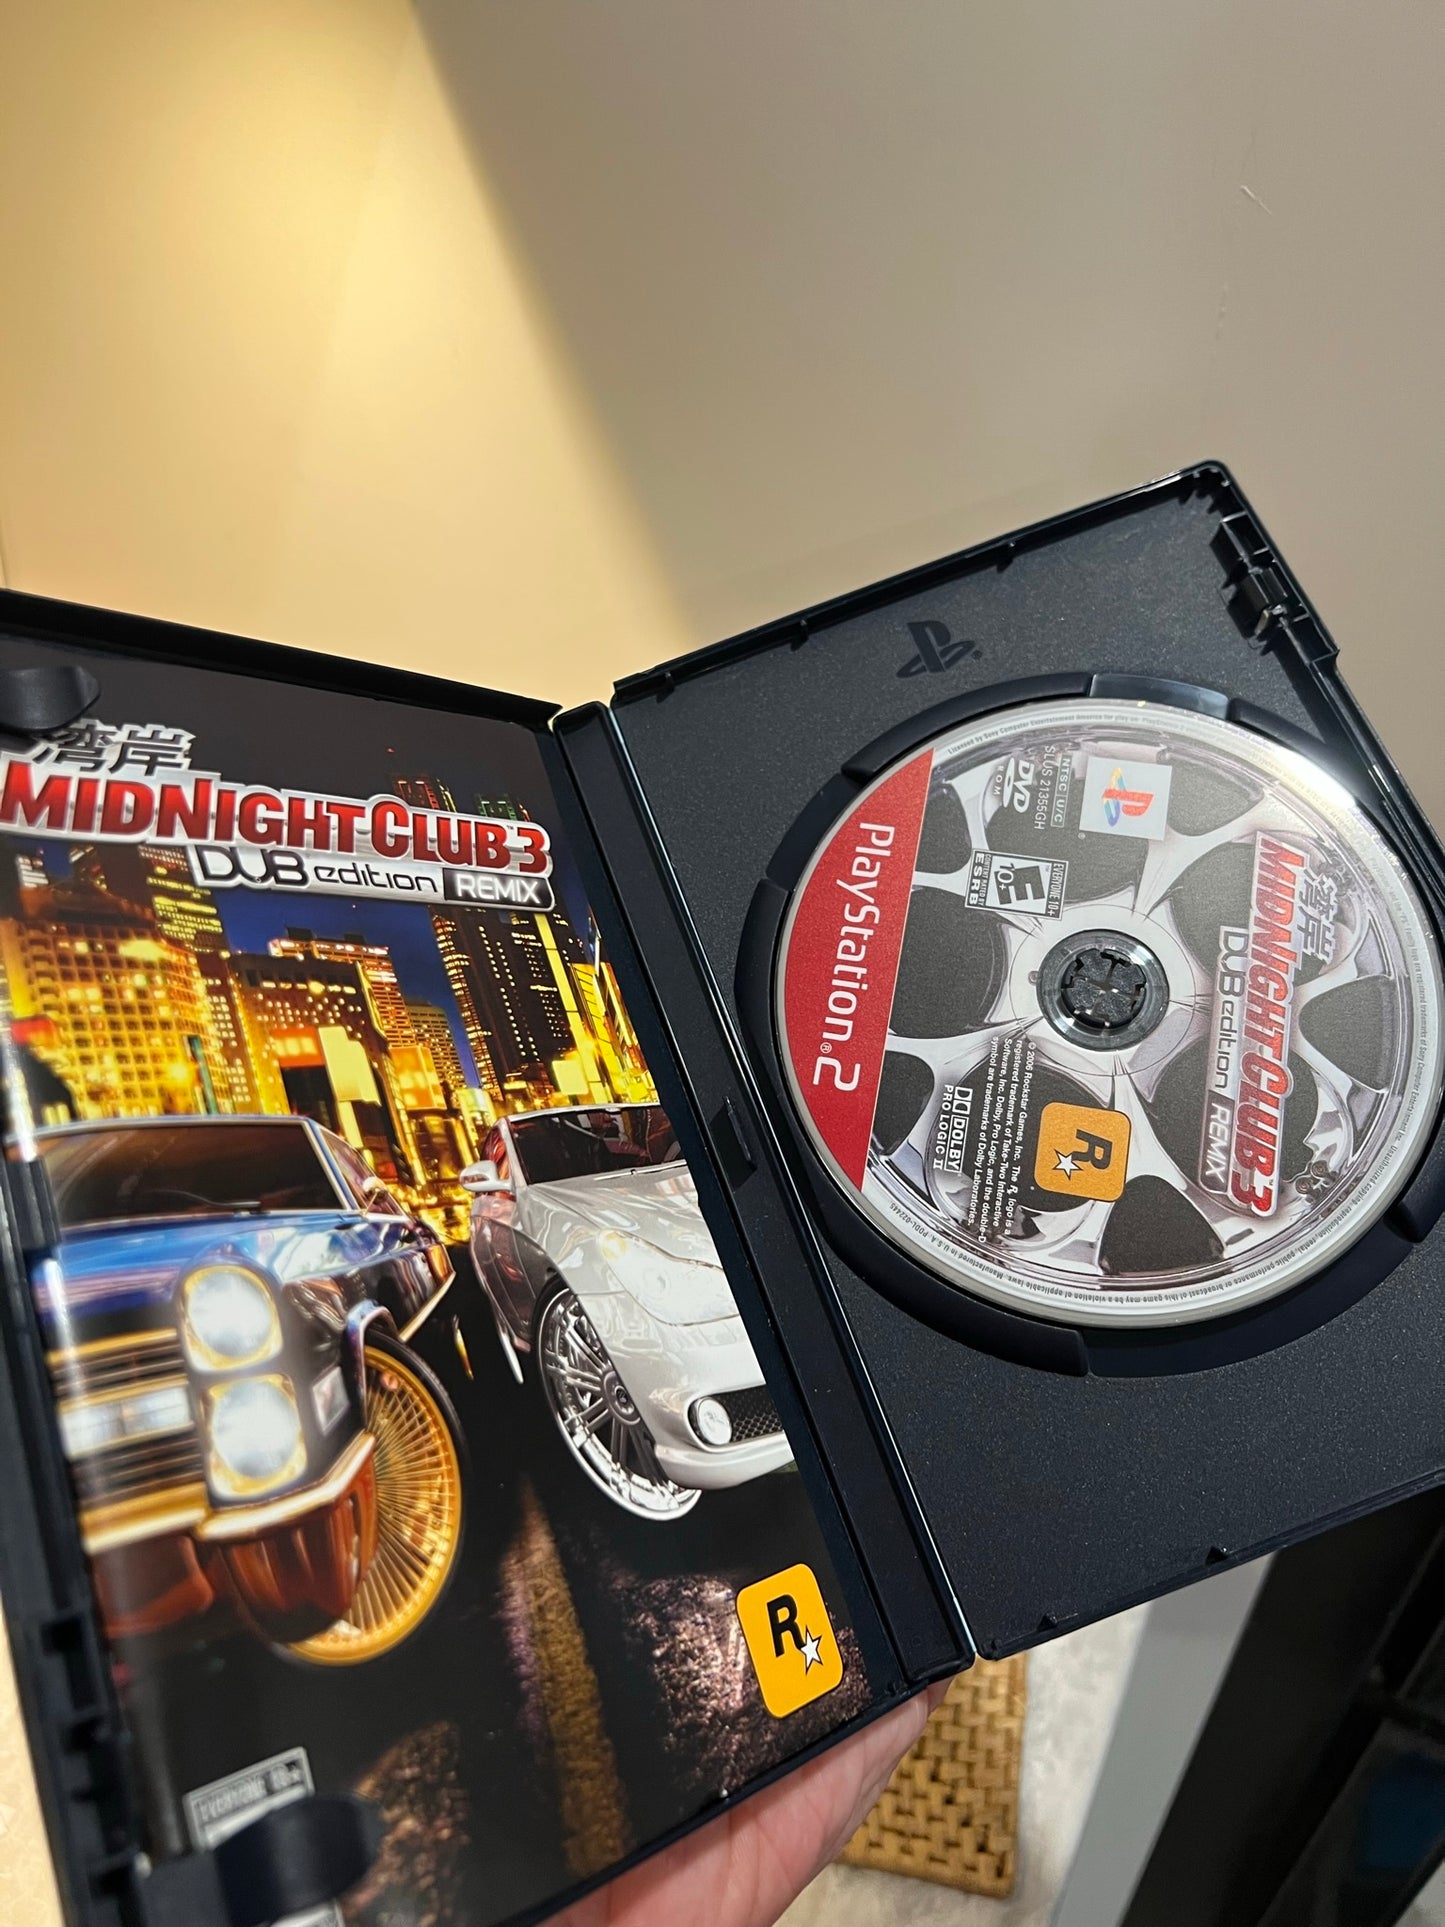 Midnight Club 3: DUB Edition Remix (PlayStation 2 PS2)